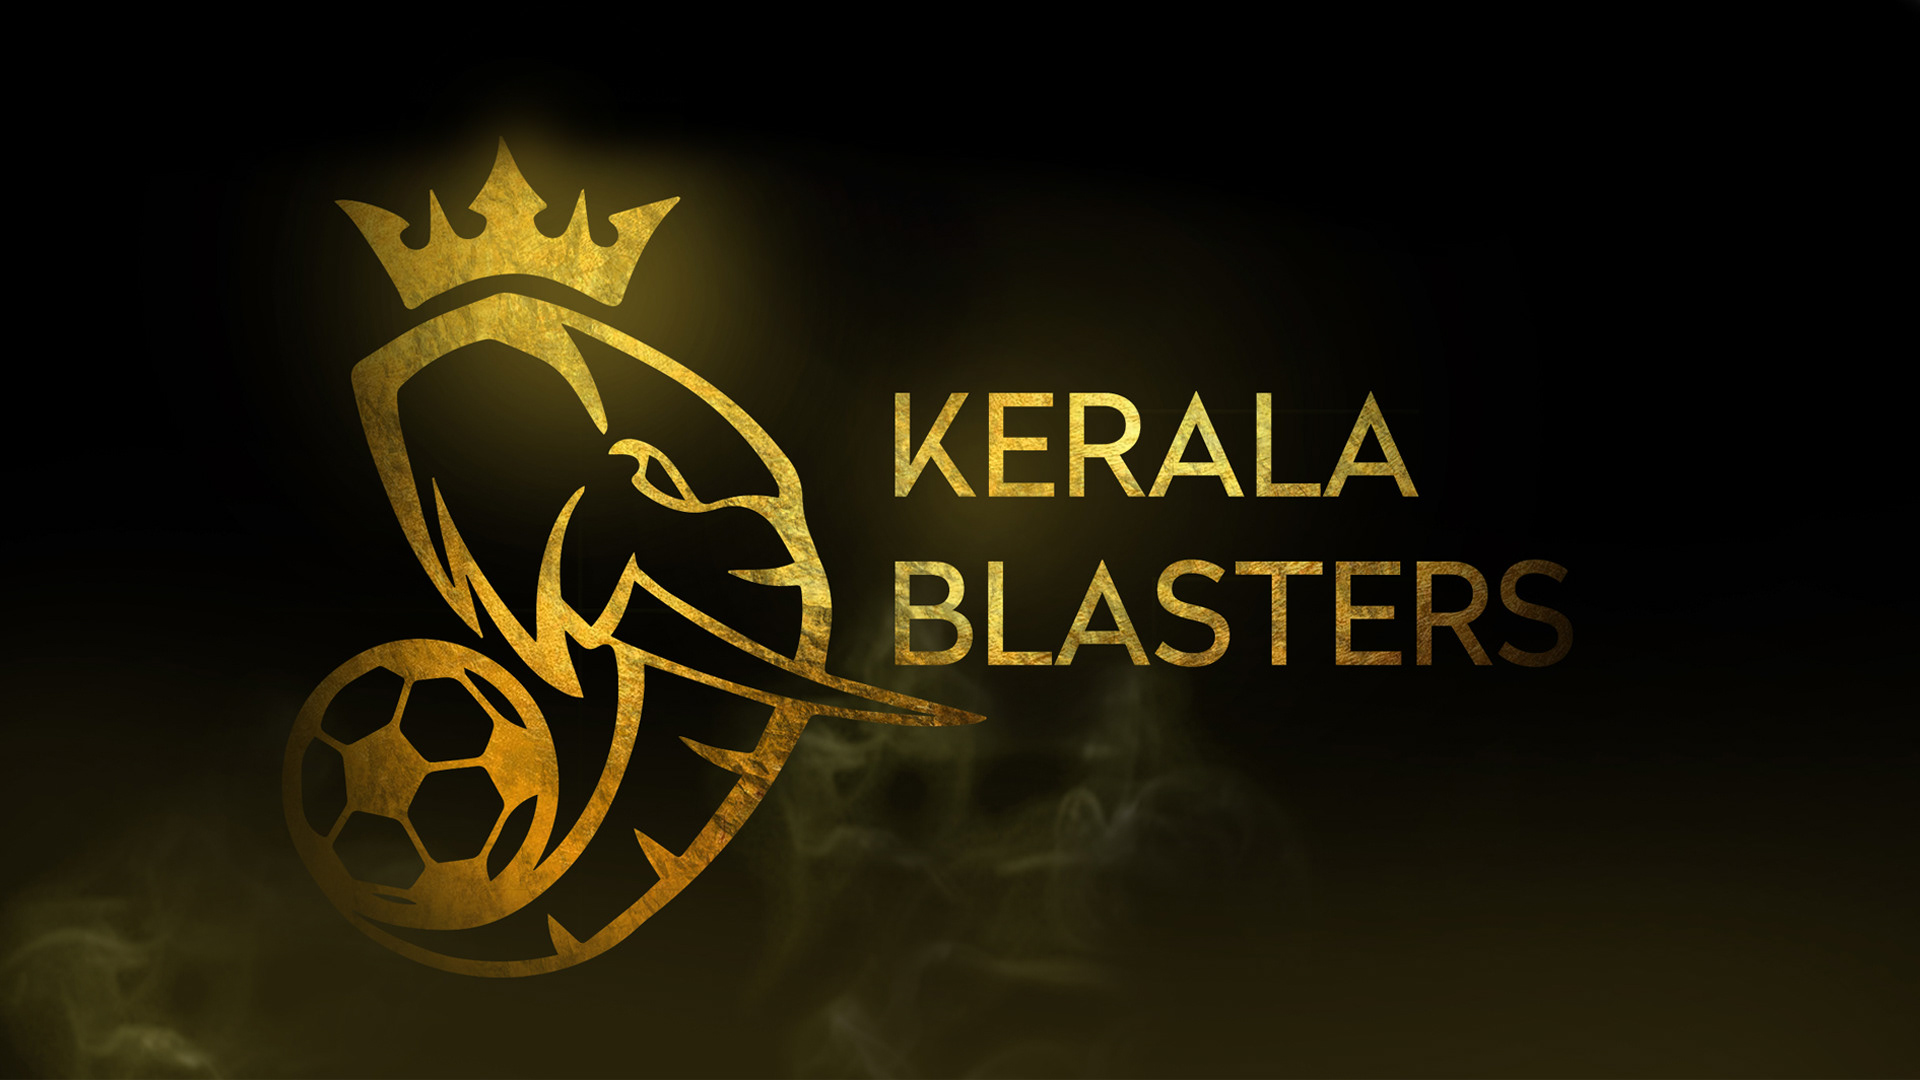 Kerala Blasters Logo Redesign on Behance